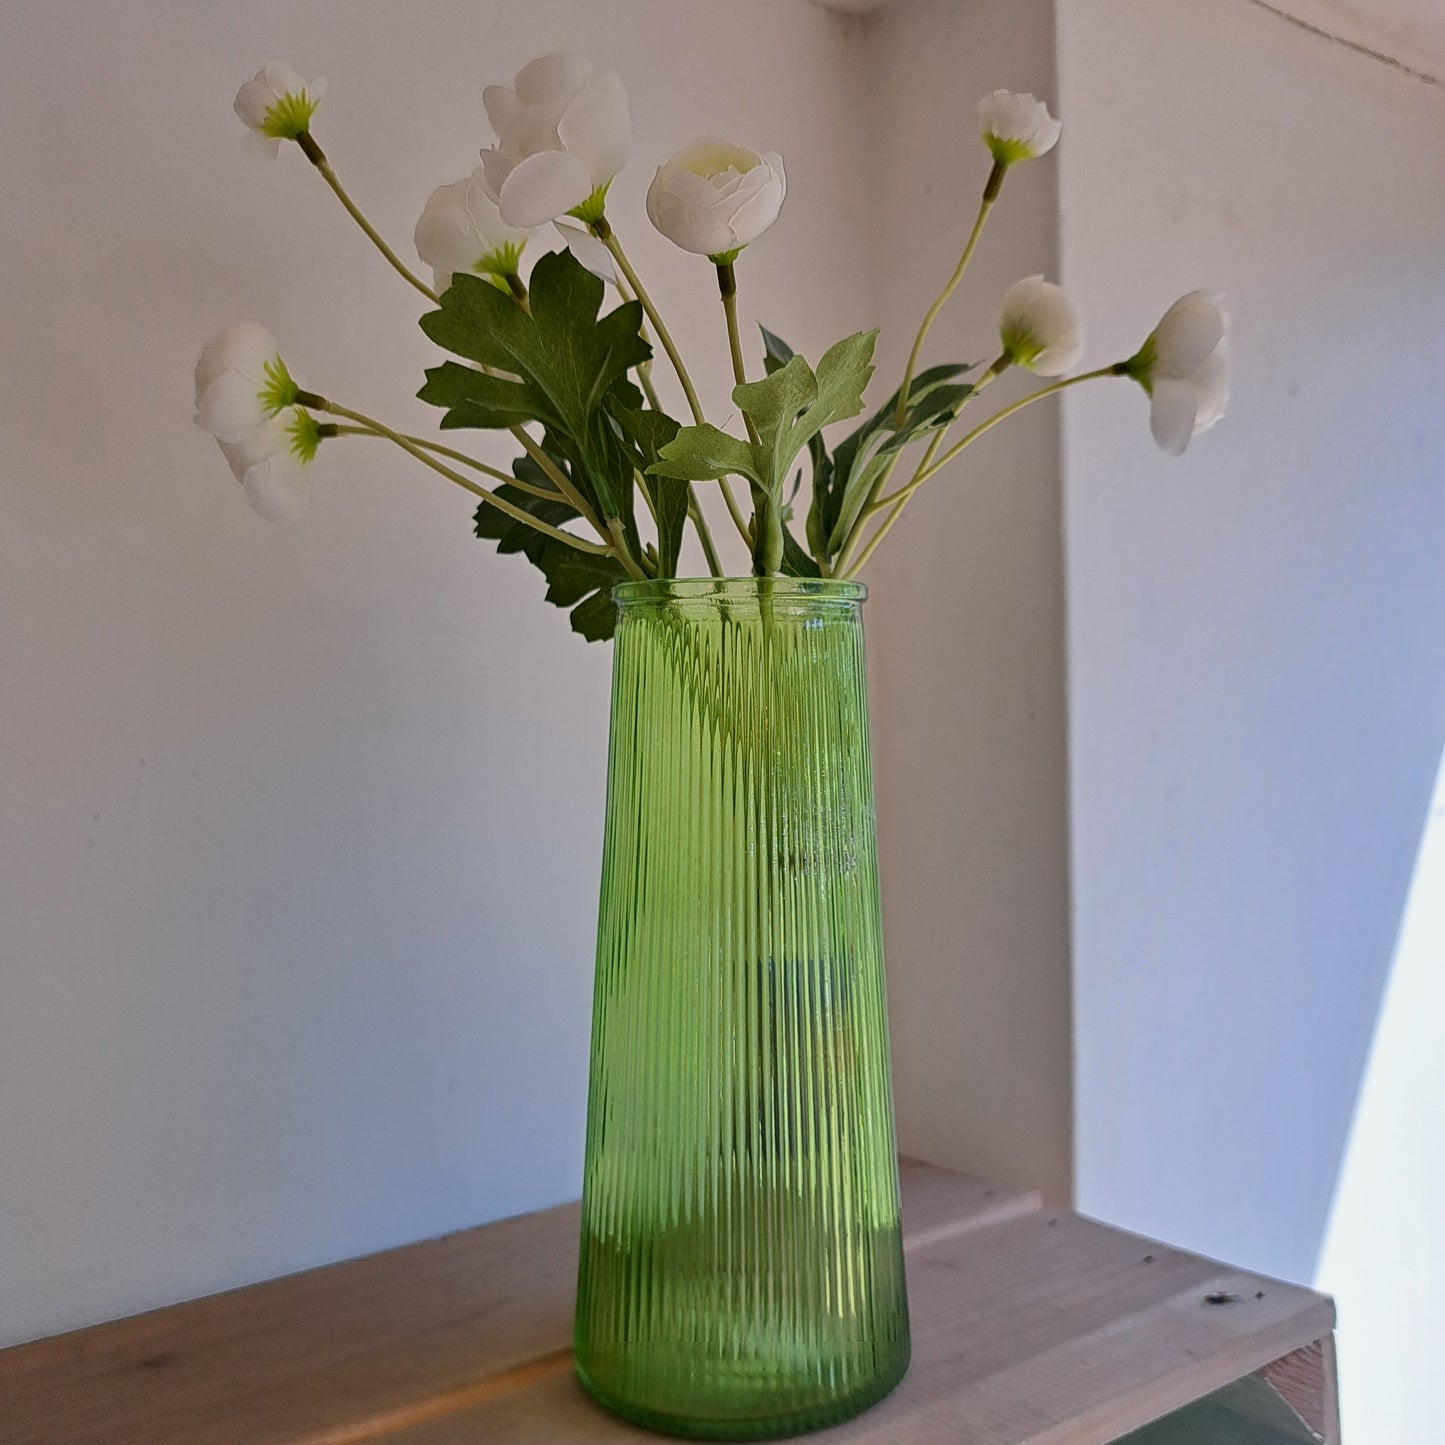 Green ribbed vase